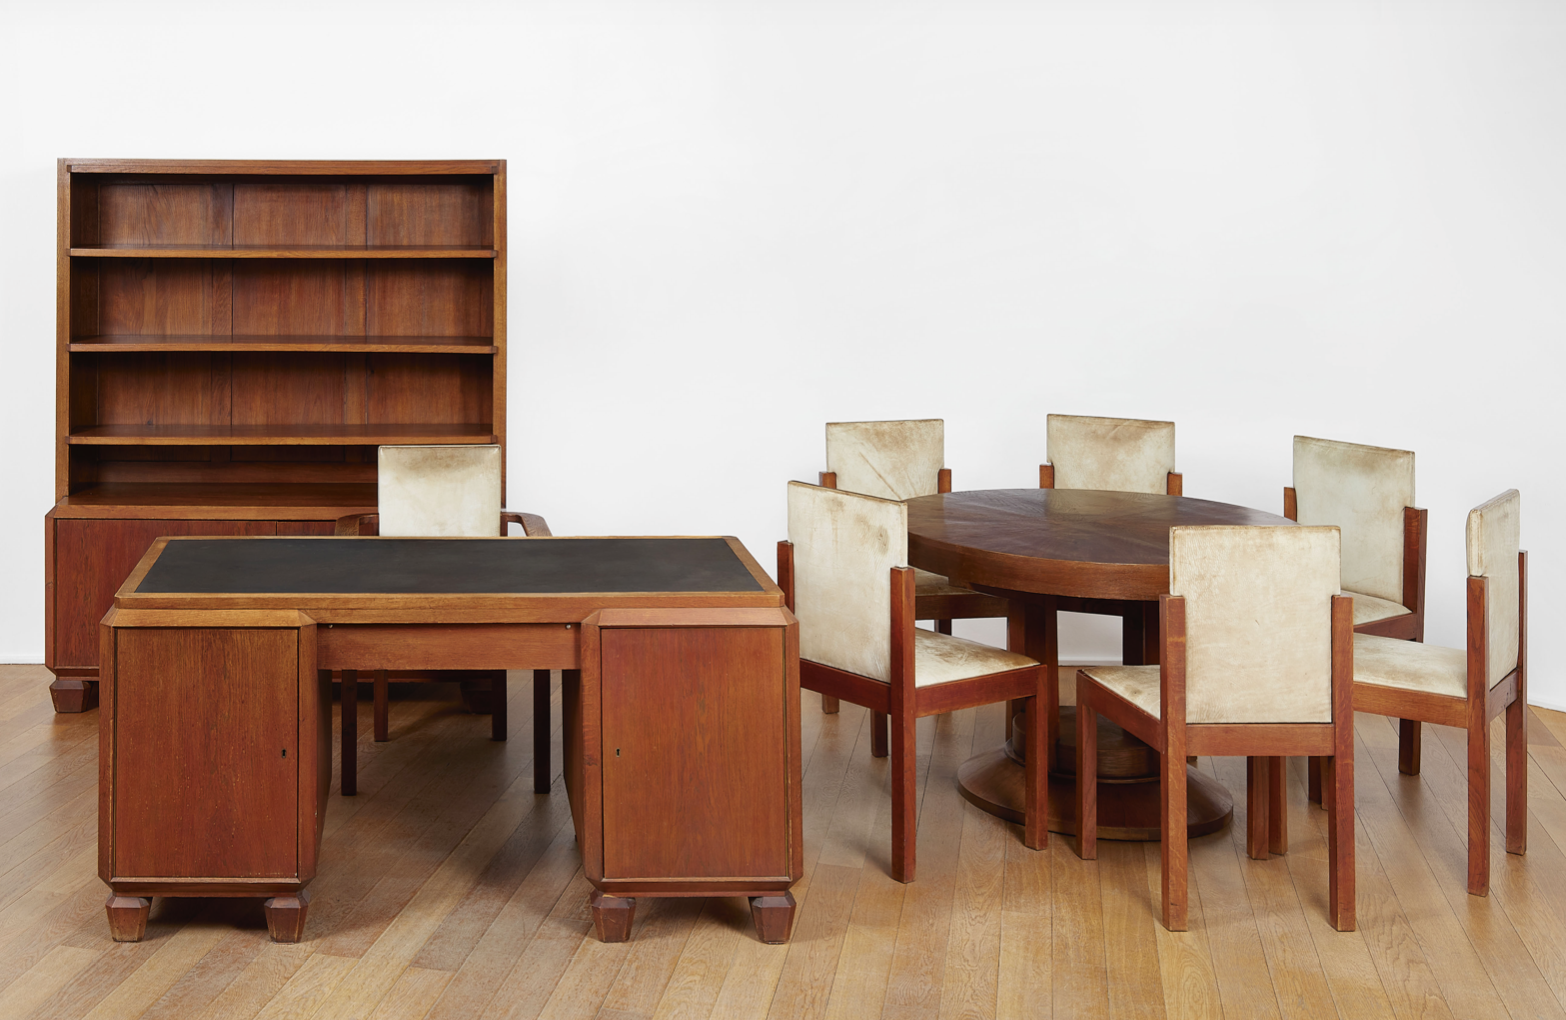 Dalle officine Bauhaus, ‘The Drawing Room’ di Gropius e Meyer in asta da Lempertz